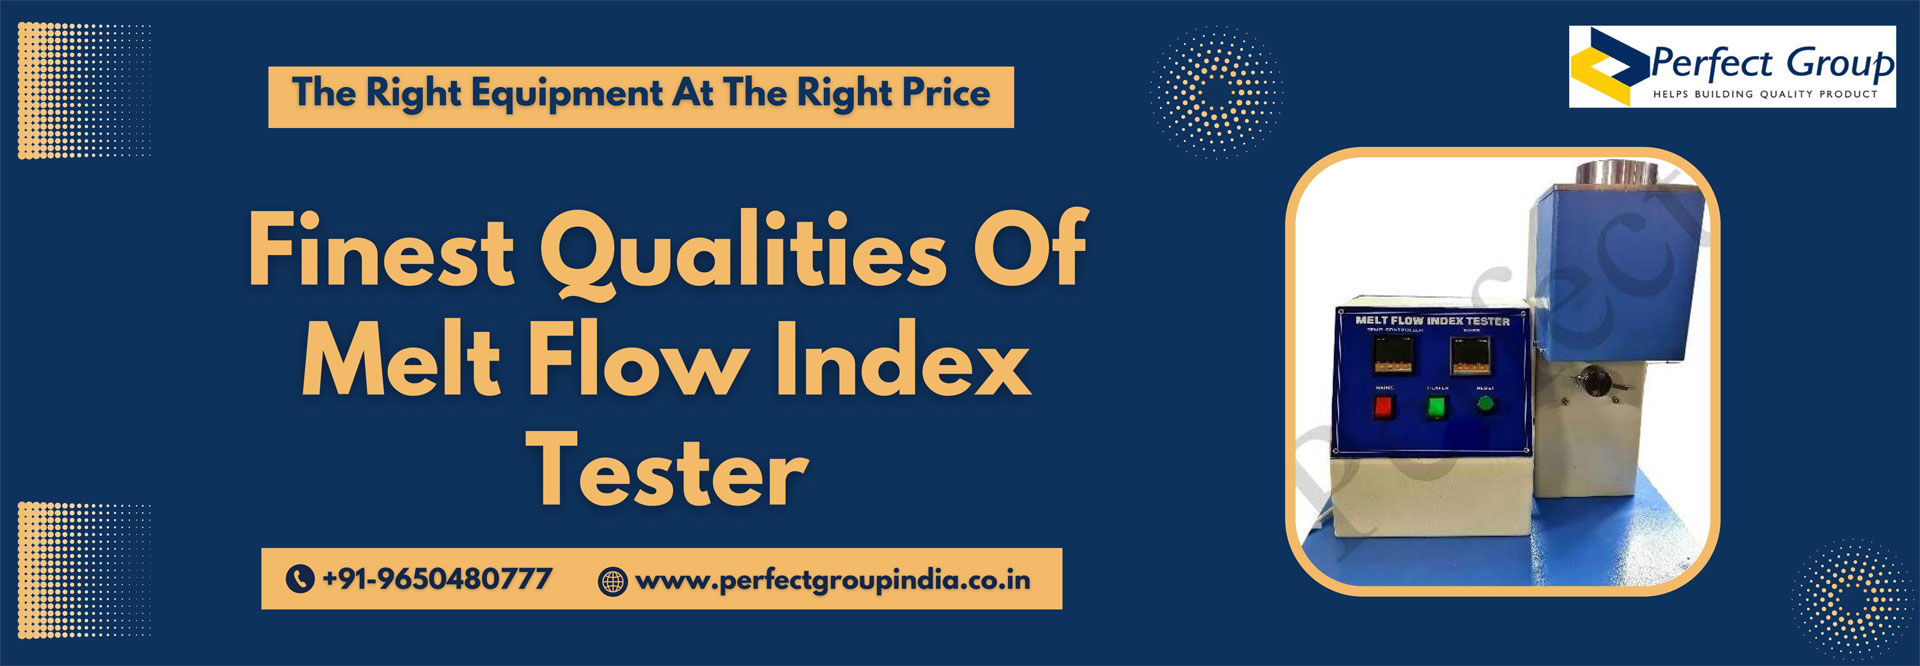 Finest Qualities Of Melt Flow Index Tester